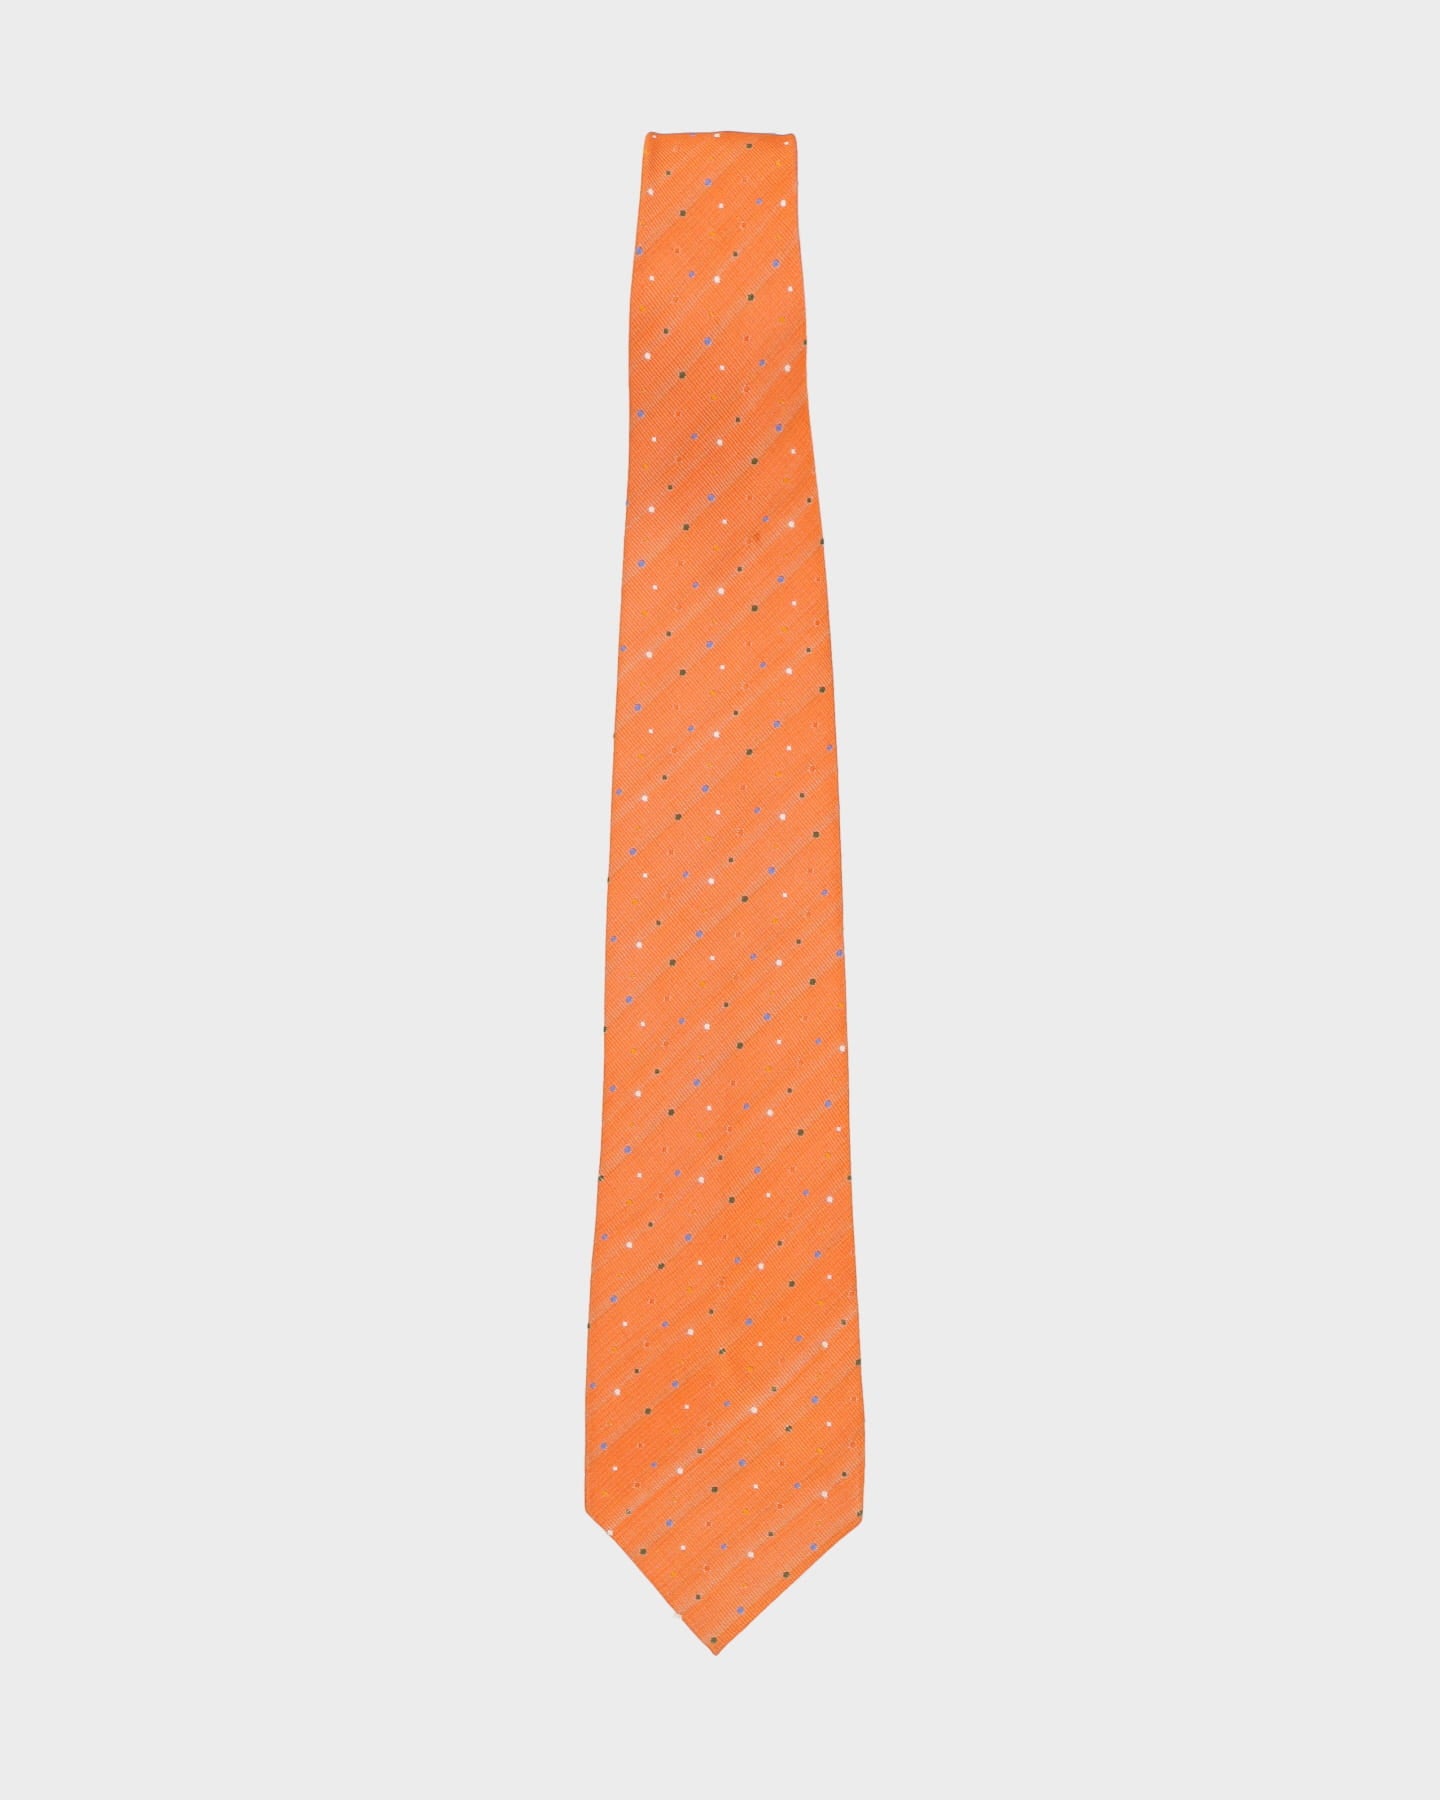 Hugo Boss Orange Patterned Tie